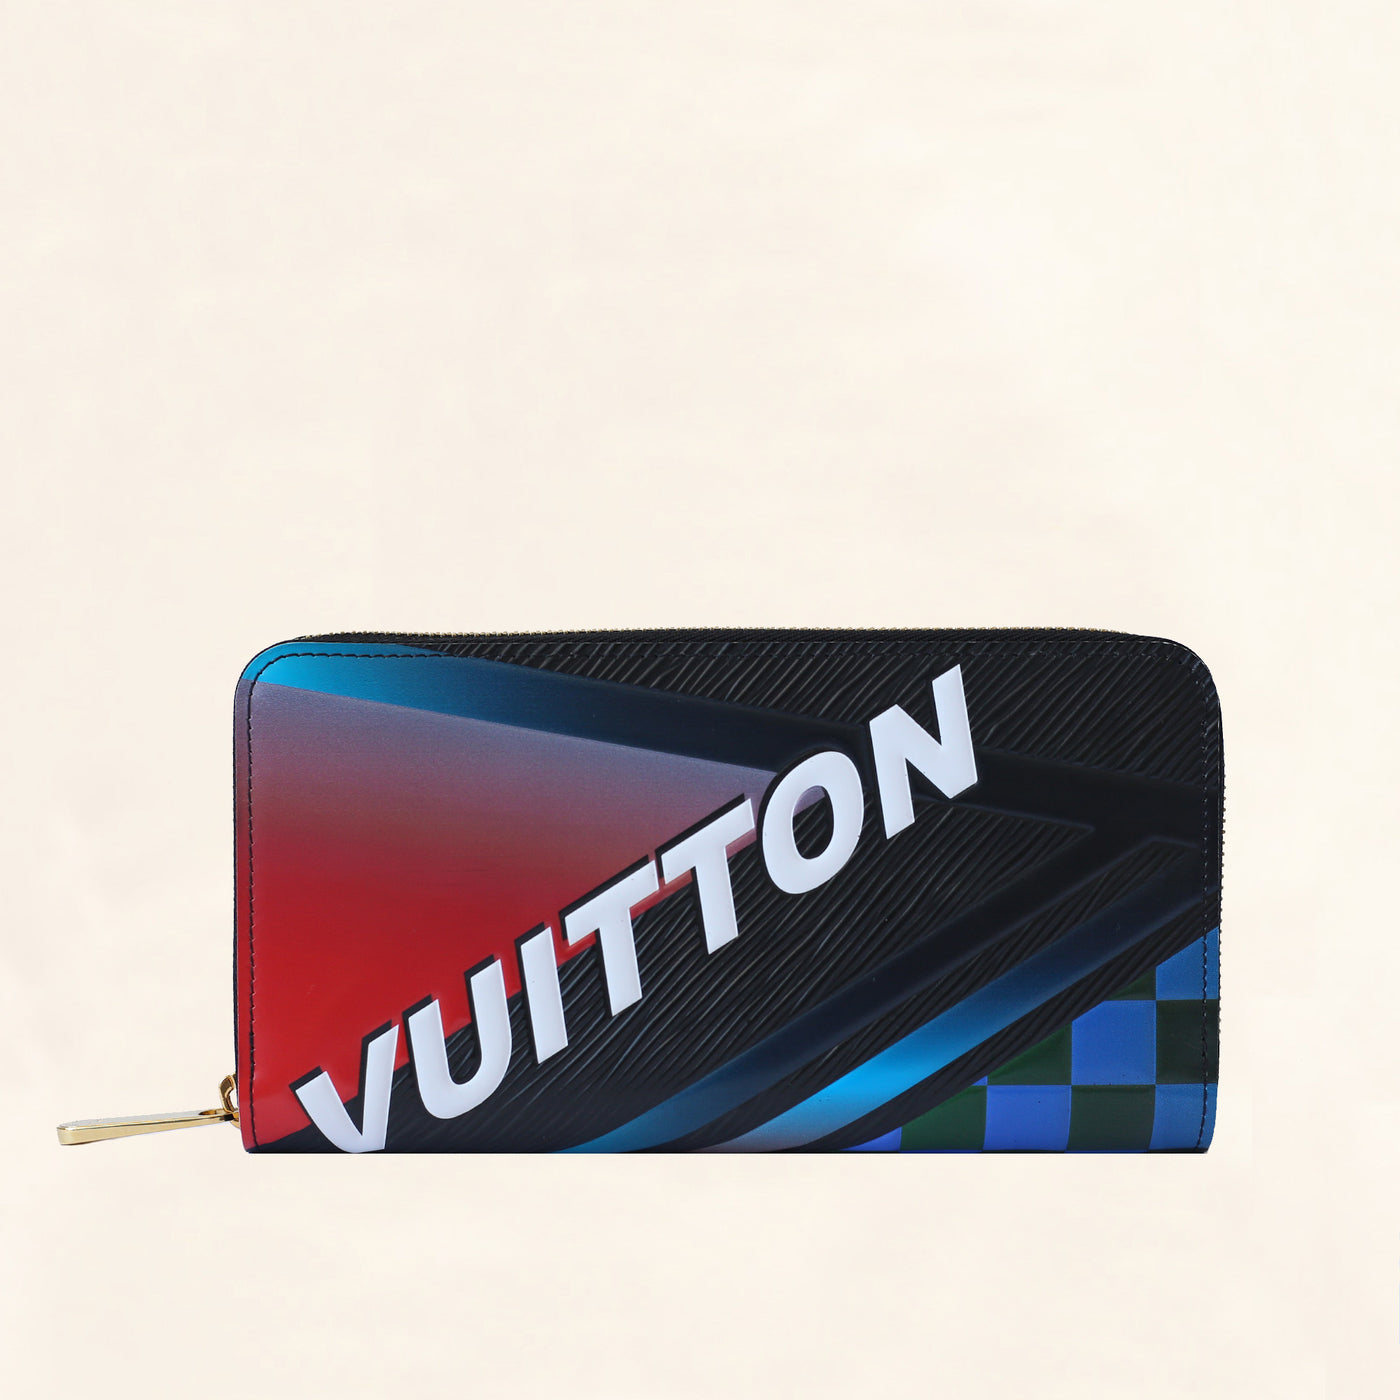 Louis Vuitton x Supreme Ultra Rare Fw17 Red Supreme Box Logo Dice Key Chain 191lvs29